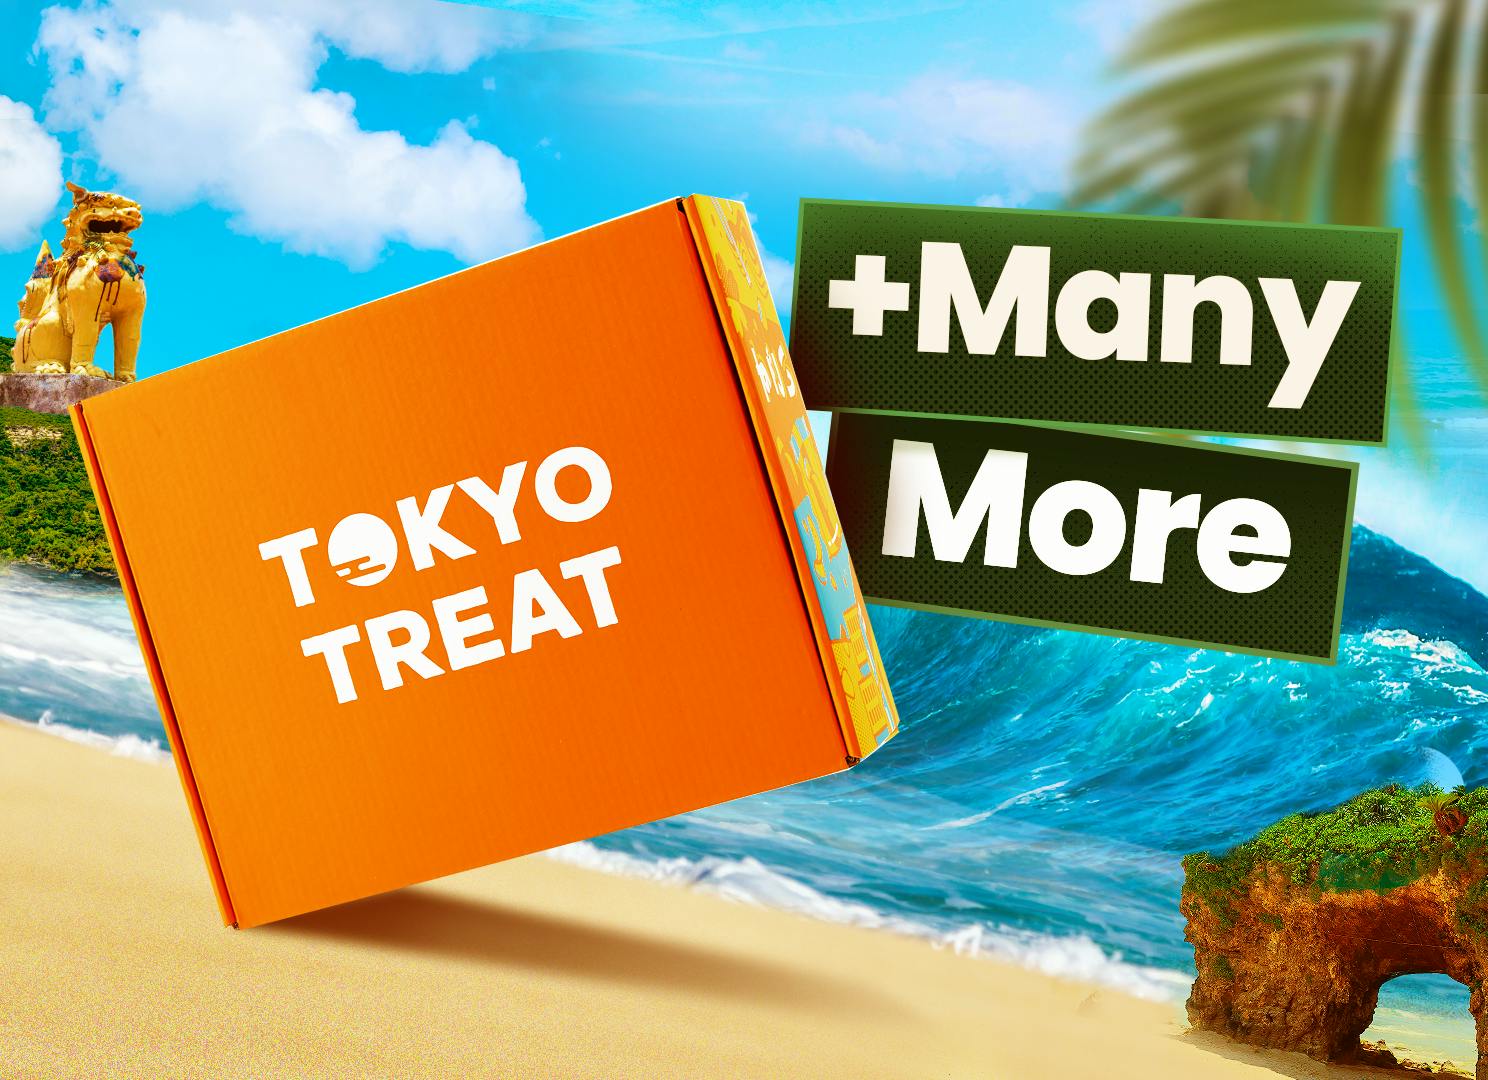 TokyoTreat's famouss orange box sits on a beach backdrop in Okinawa.